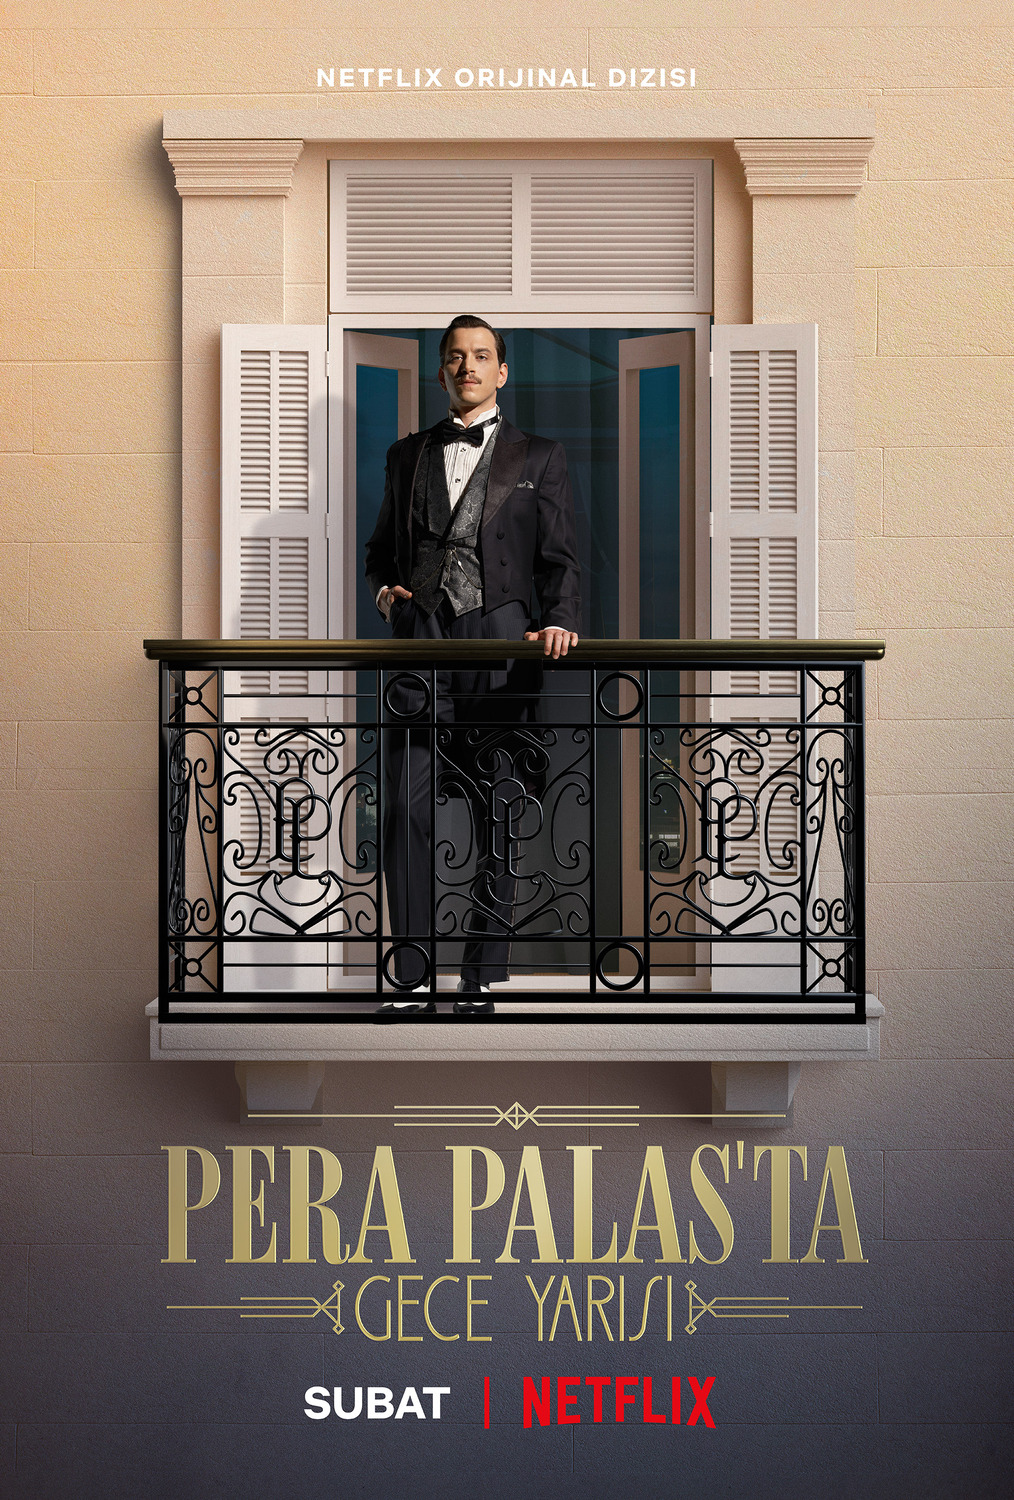 Extra Large TV Poster Image for Pera Palas'ta Gece Yarisi (#7 of 10)